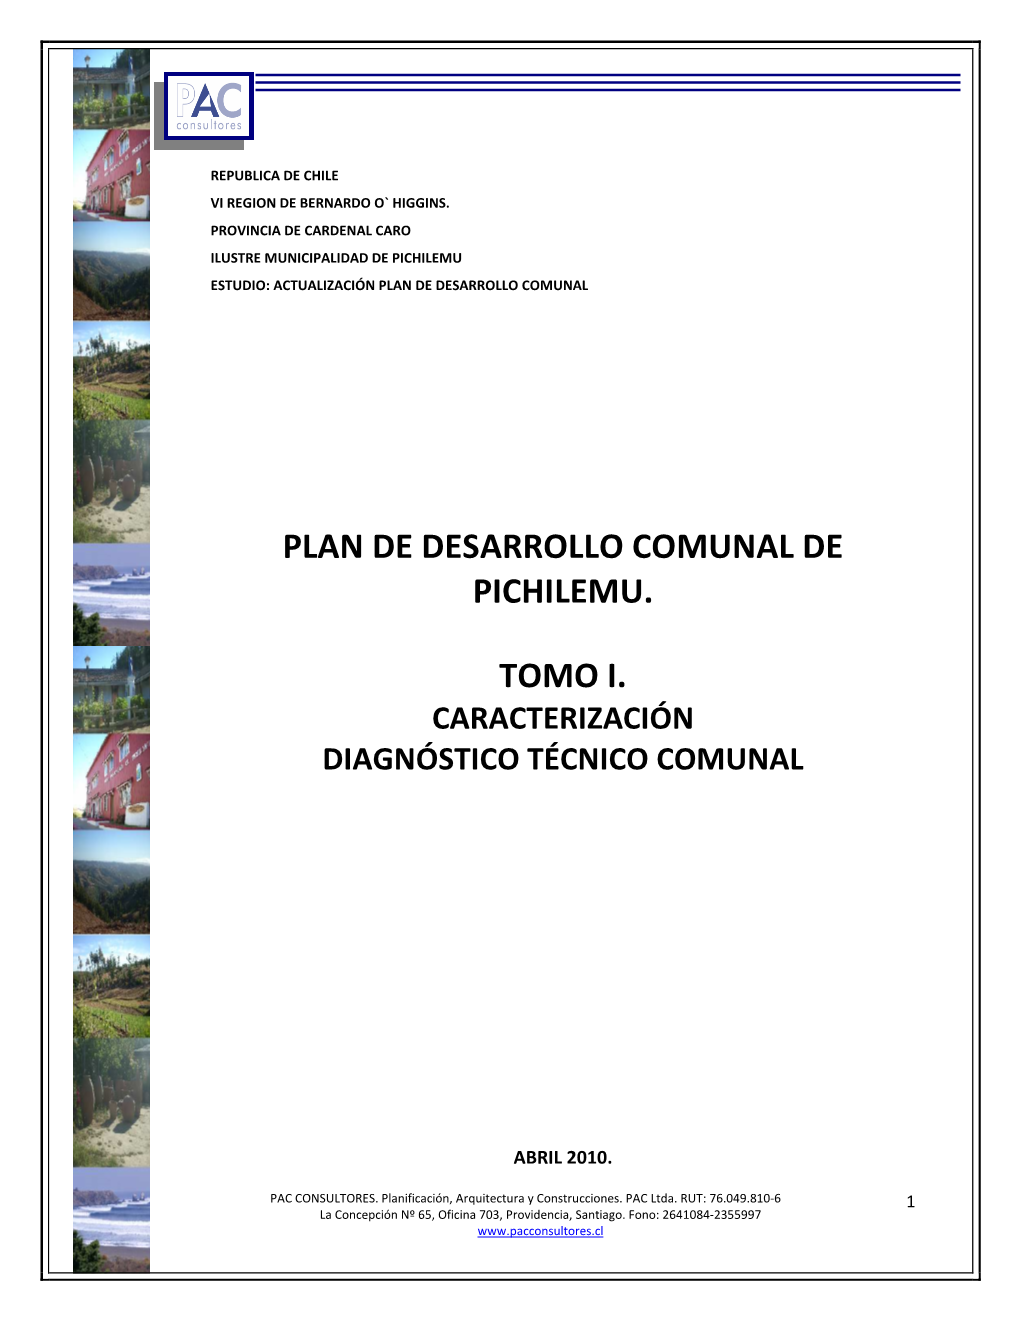 Plan De Desarrollo Comunal. Pichilemu 2010-2014. Tomo I